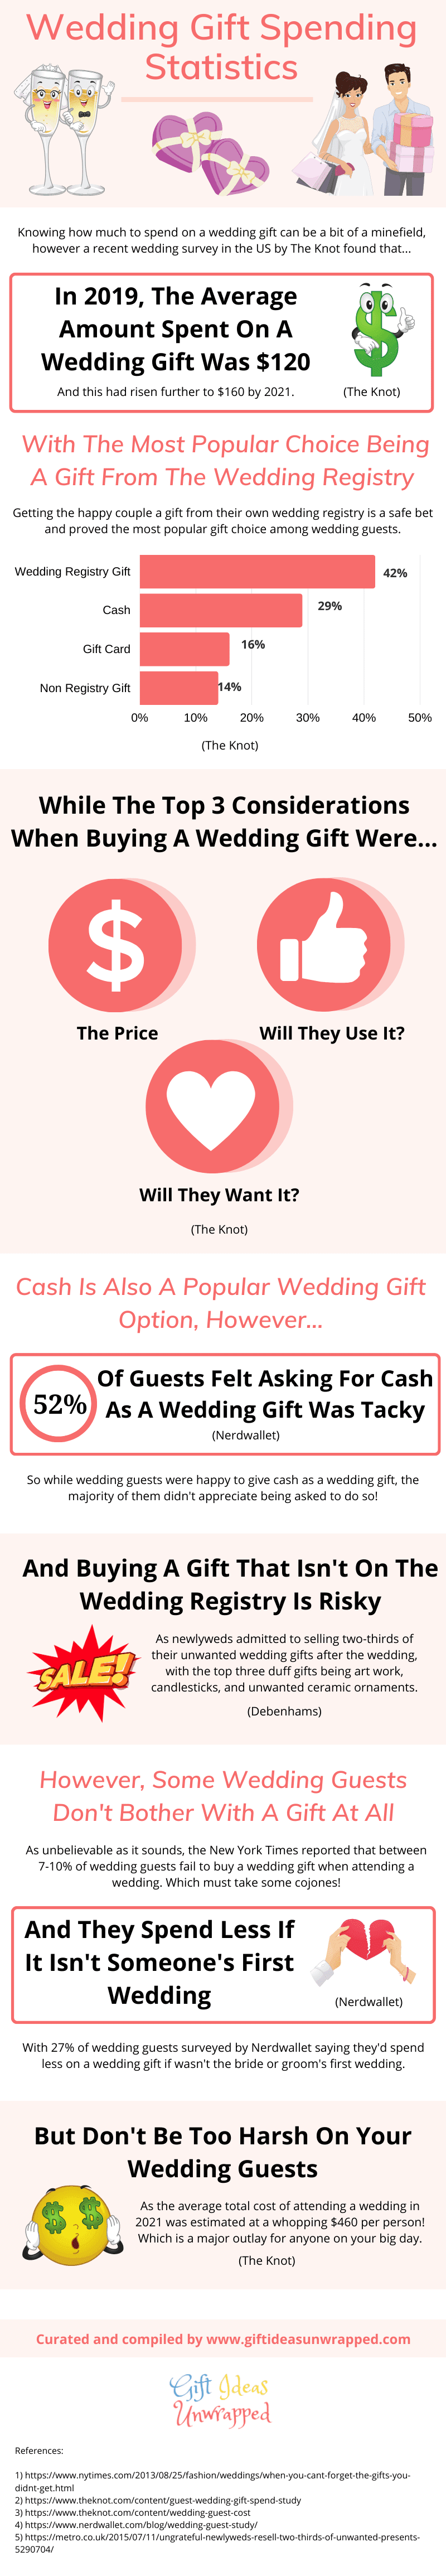 Wedding gift spending infographic